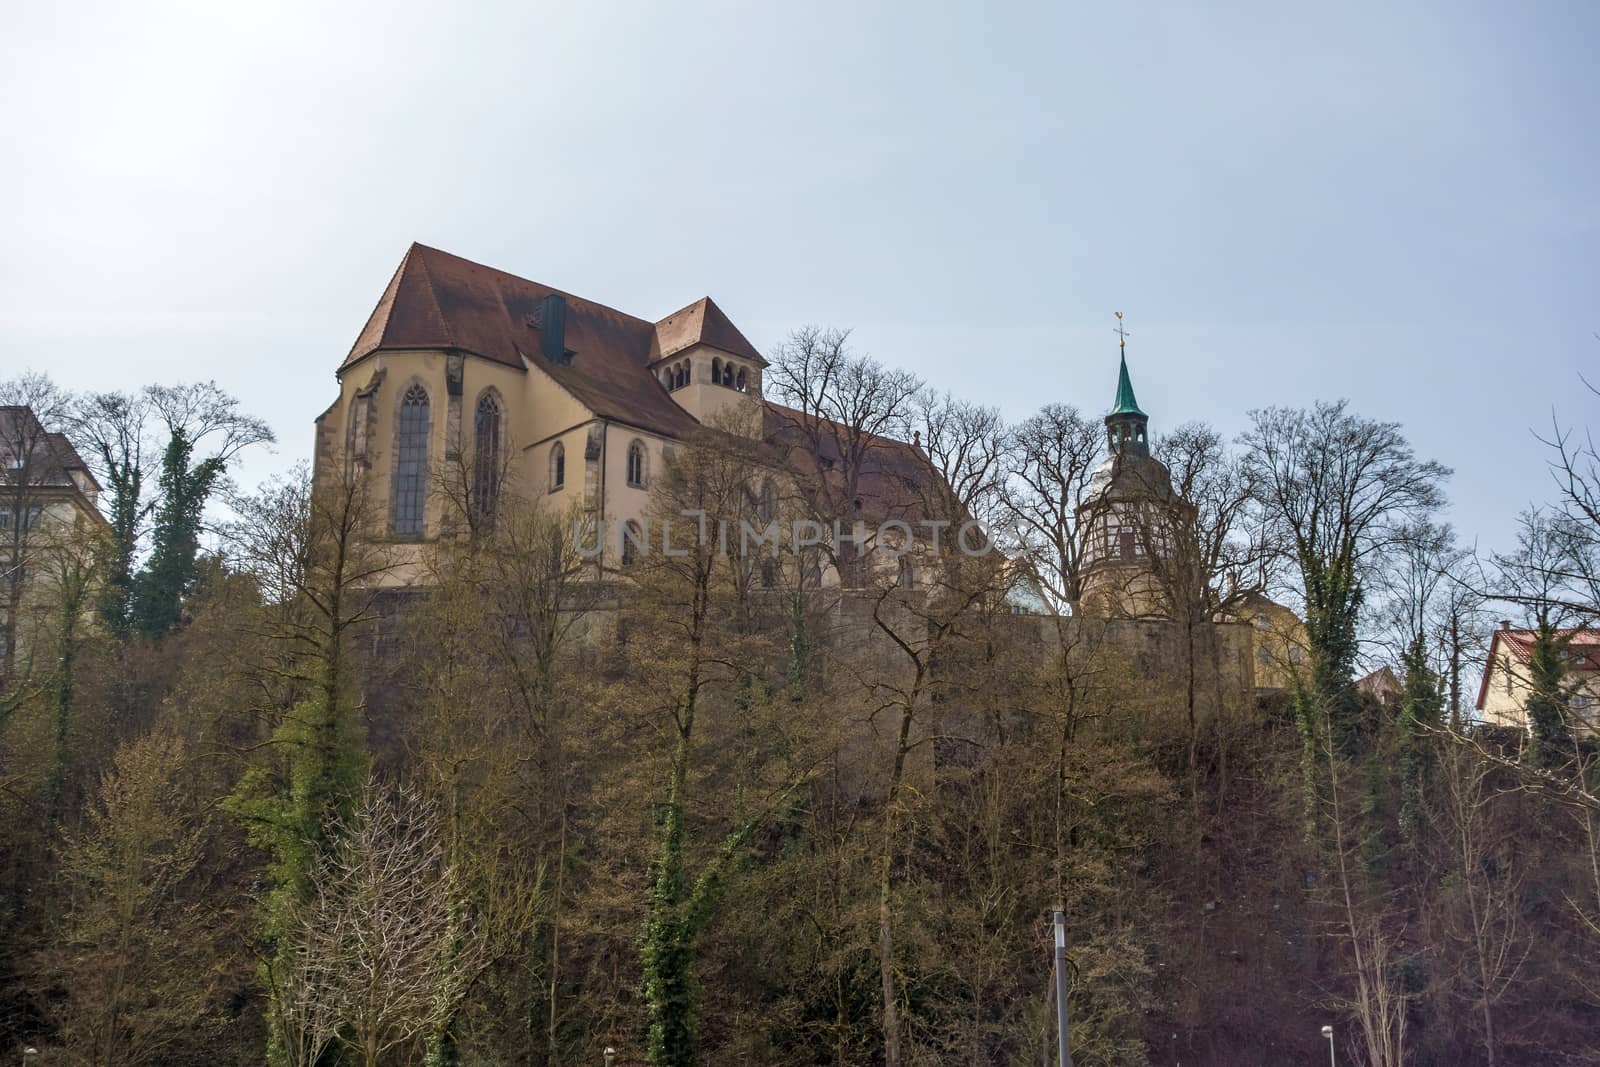 Backnang, Germany - April 03, 2016: Abbey church of Backnang above the city near town hall and market place.